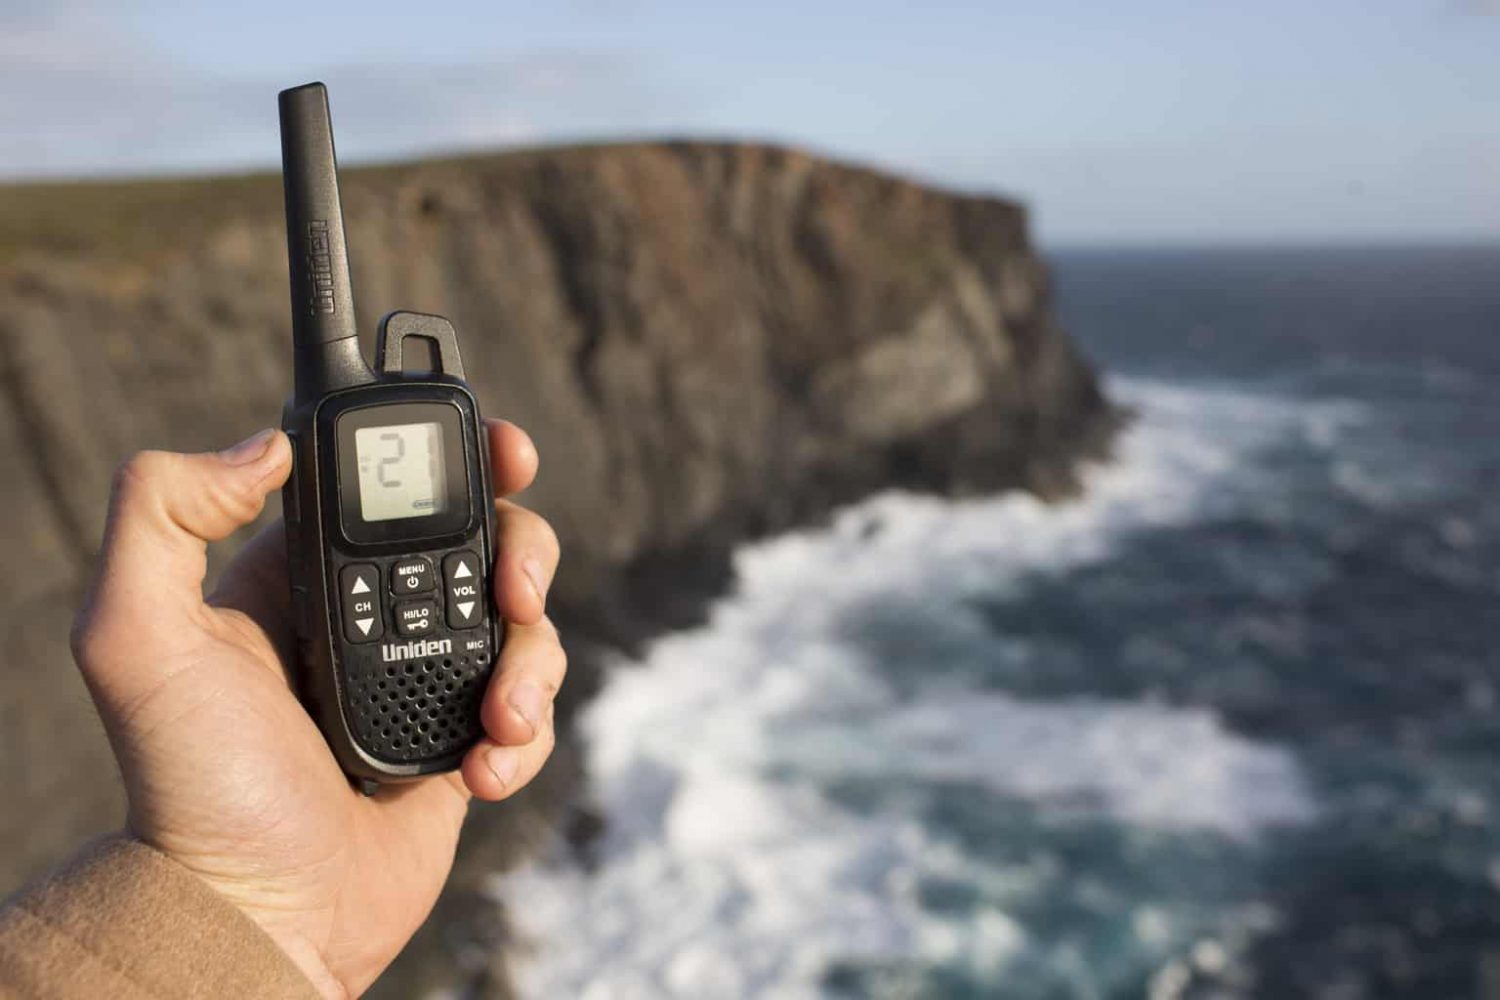 Uniden-UH620 handheld radio